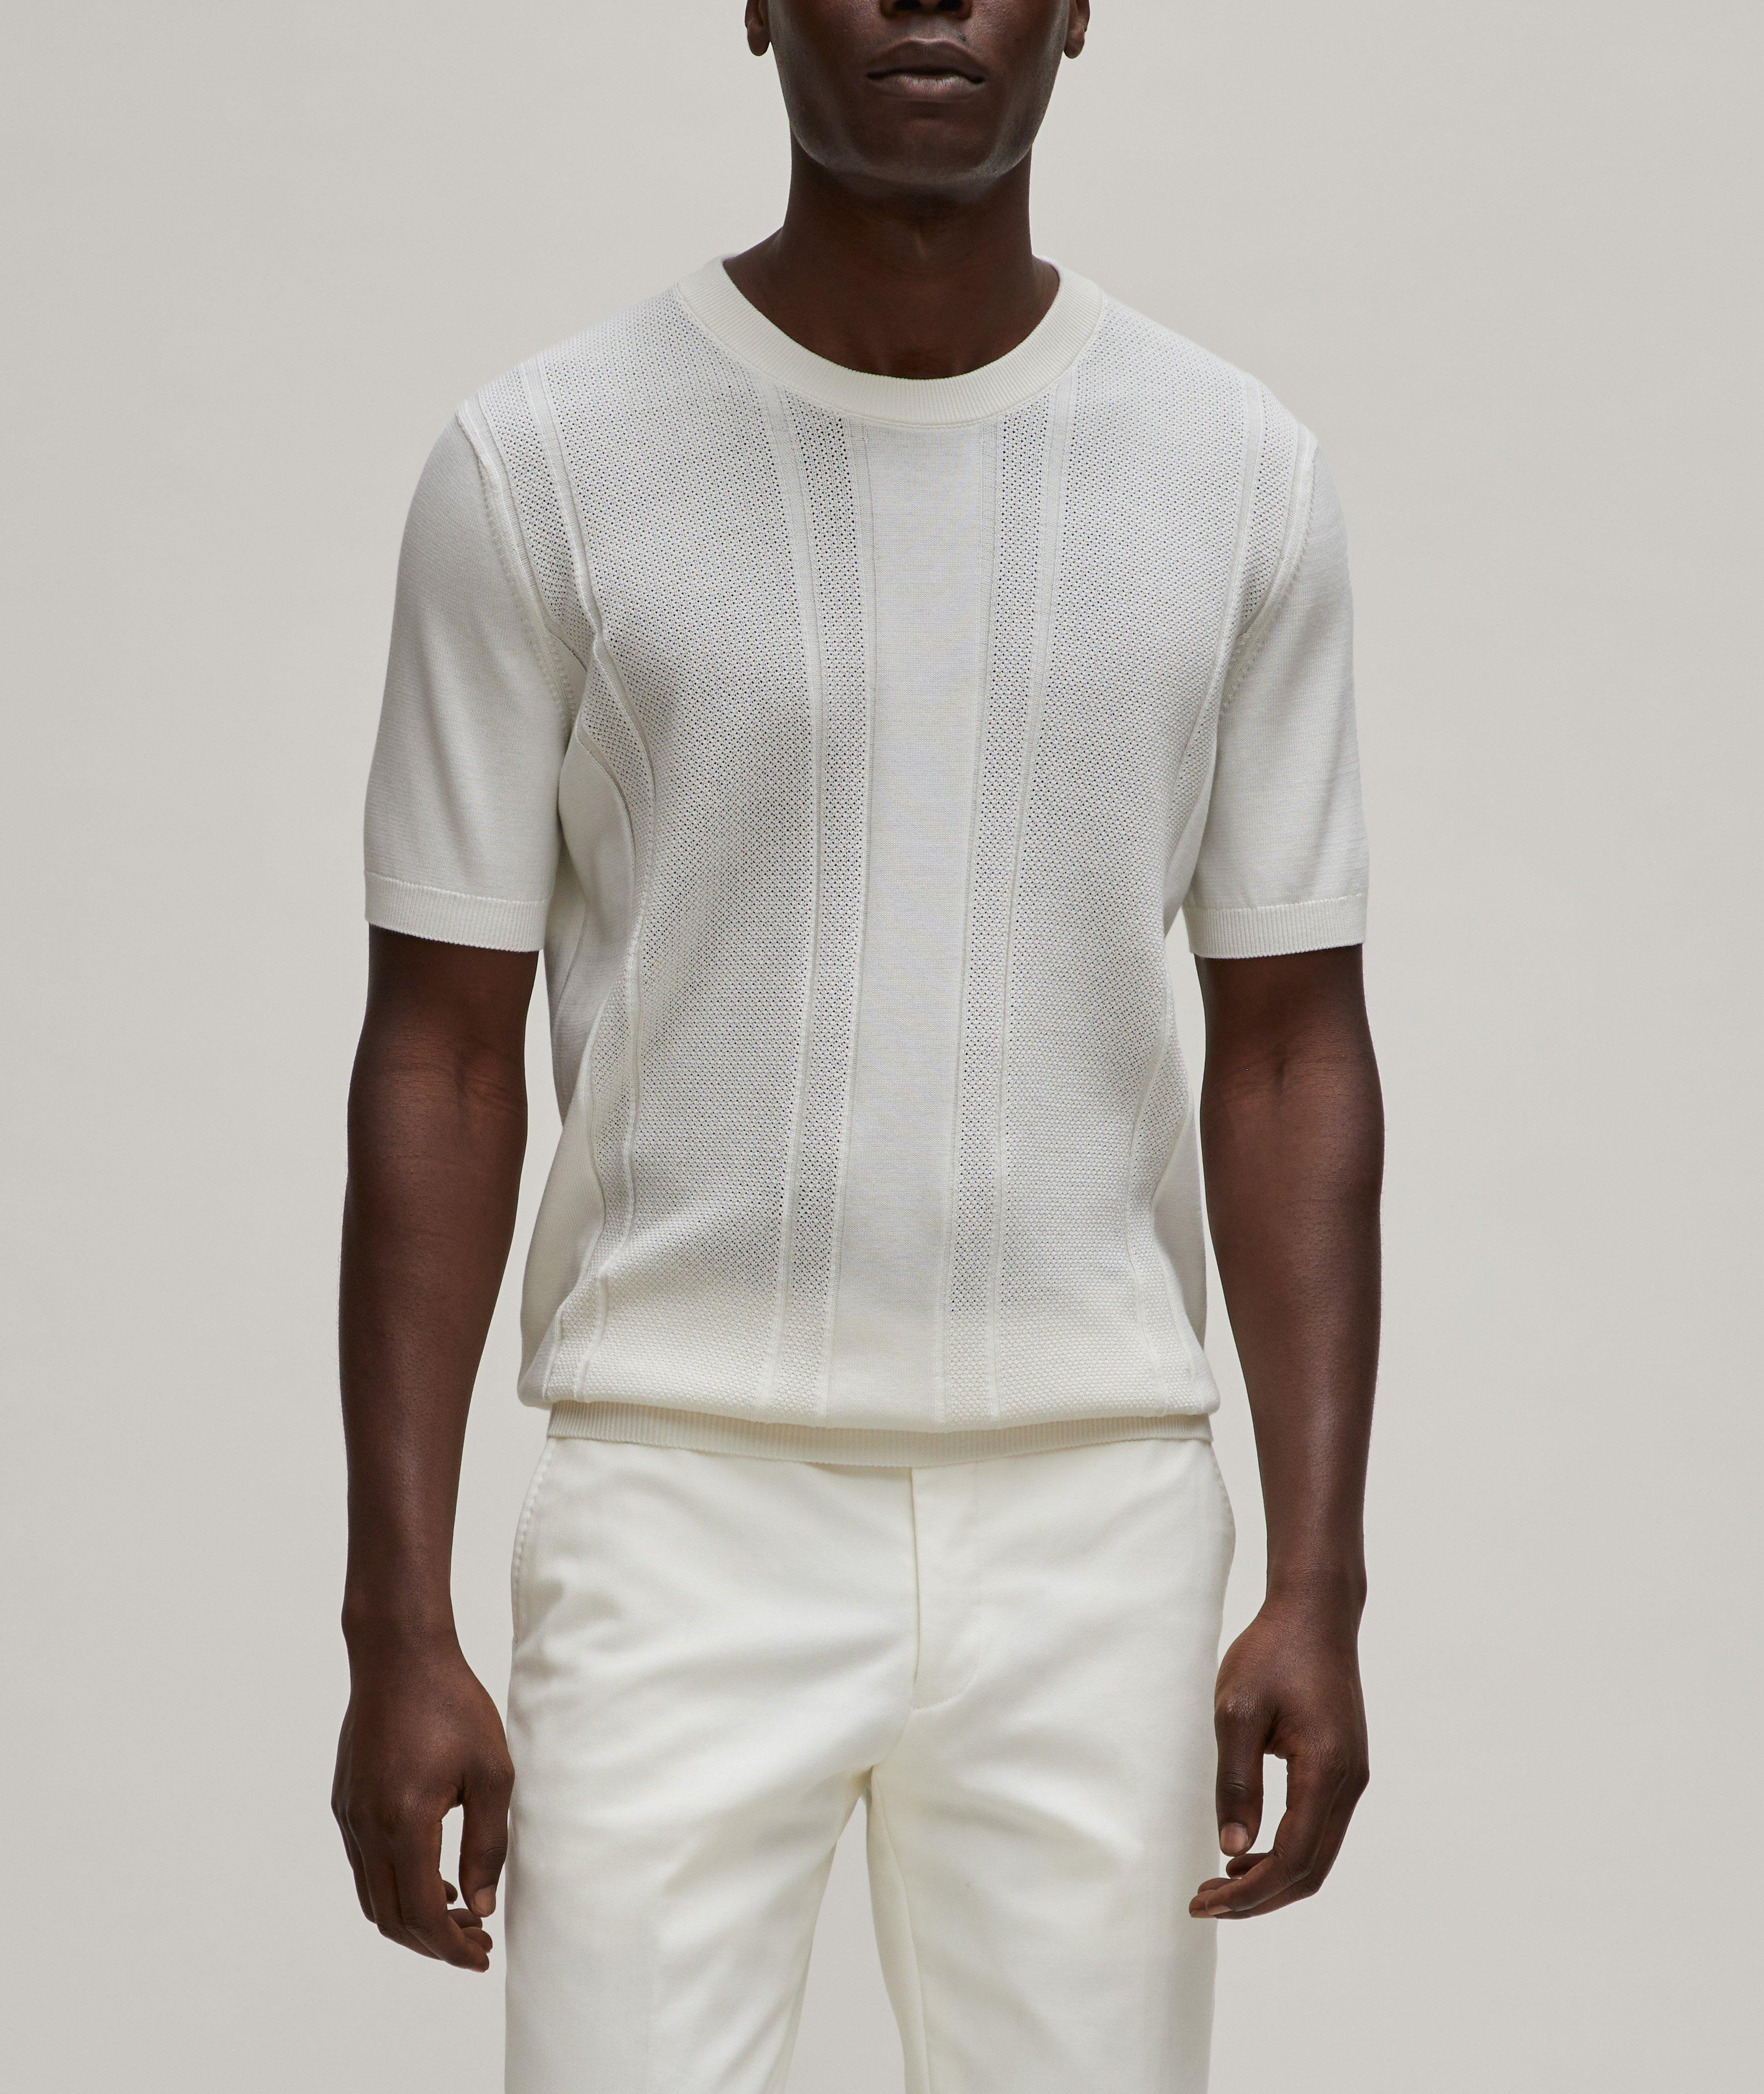 Textured Panels Knit Cotton T-Shirt image 1